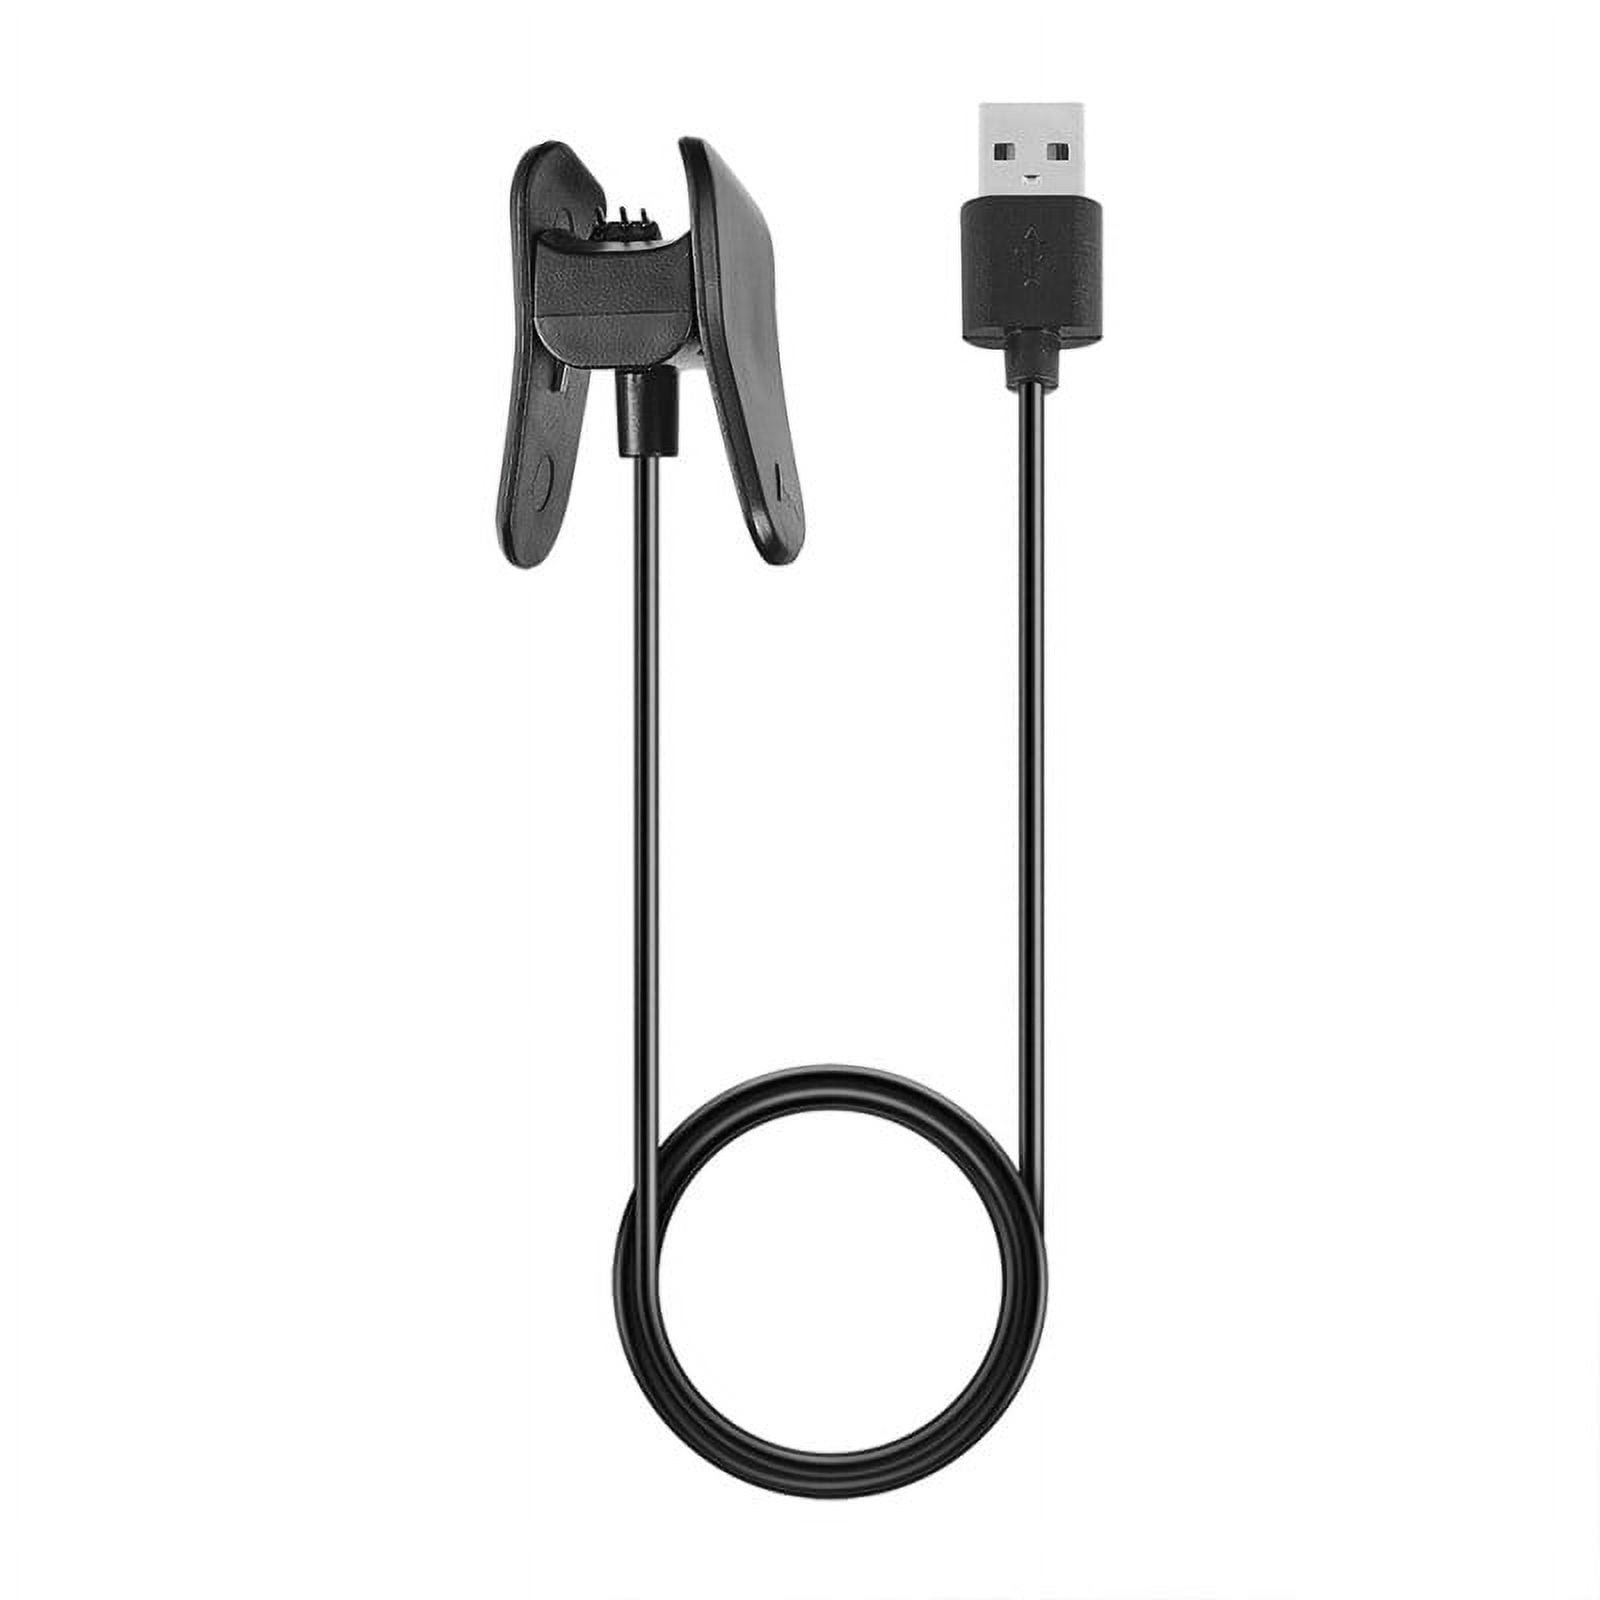 Lydighed Kiks sort Charger for Garmin Vivosmart 4 Activity Tracker - USB Quick Charging Cable  Clip Cradle 100cm - Fitness Tracker Accessories (1-Pack) - Walmart.com